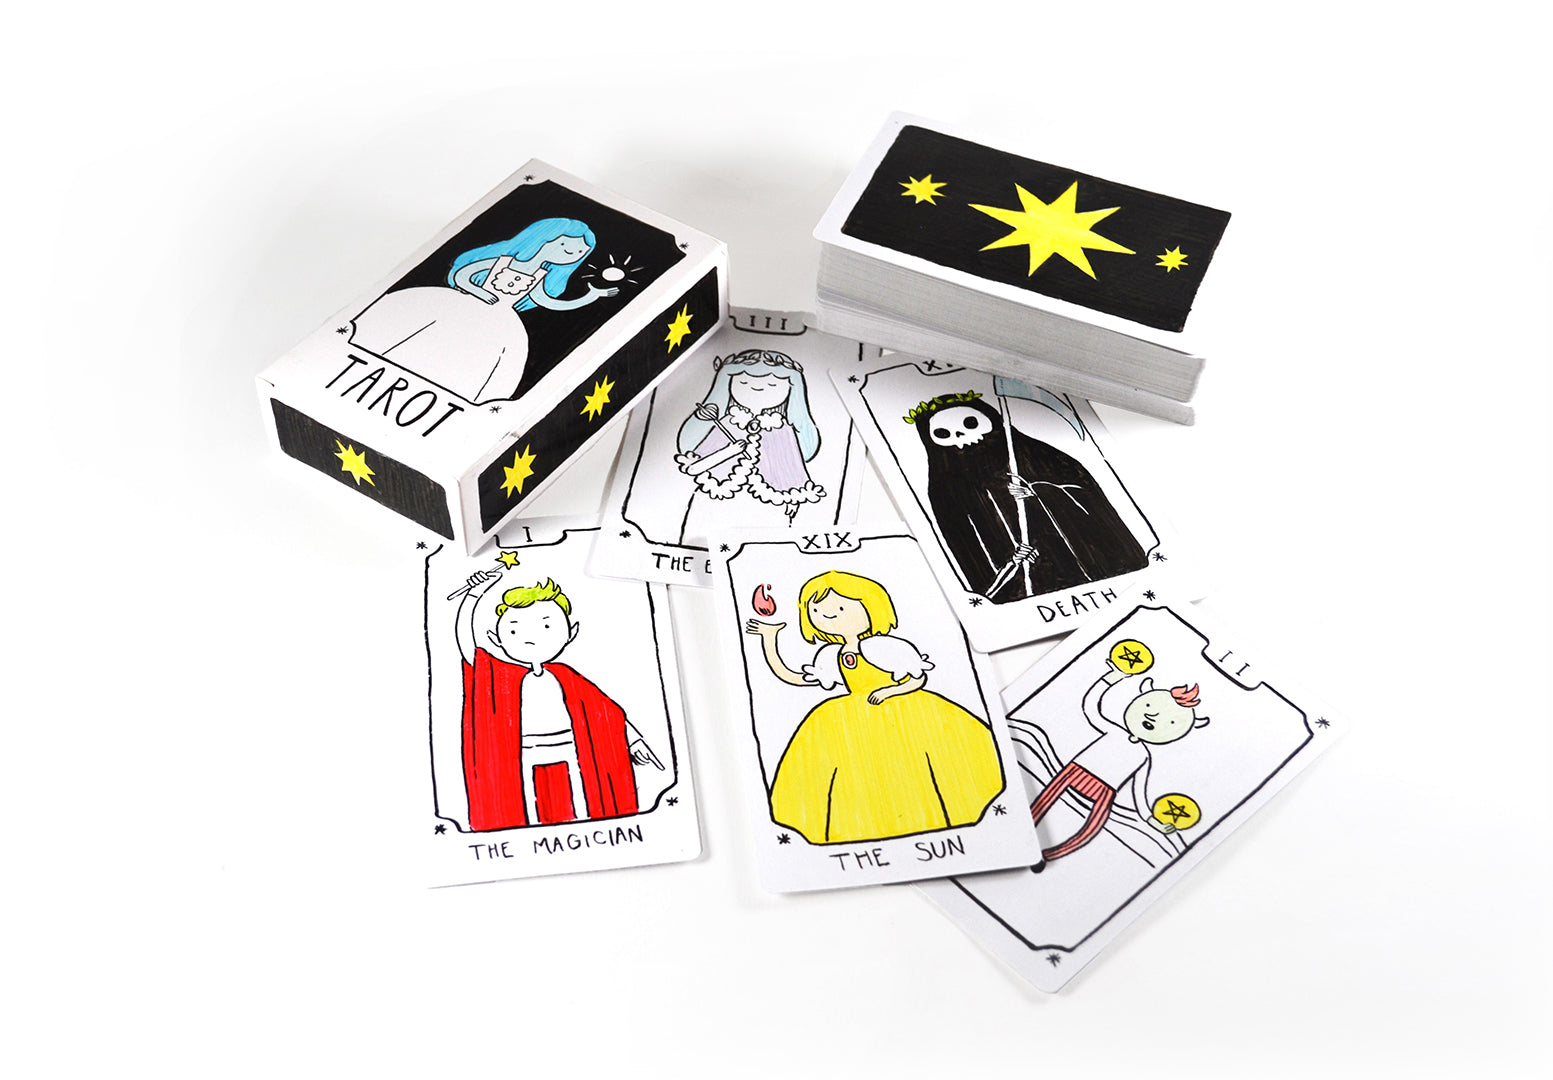 Blank Tarot Cards 